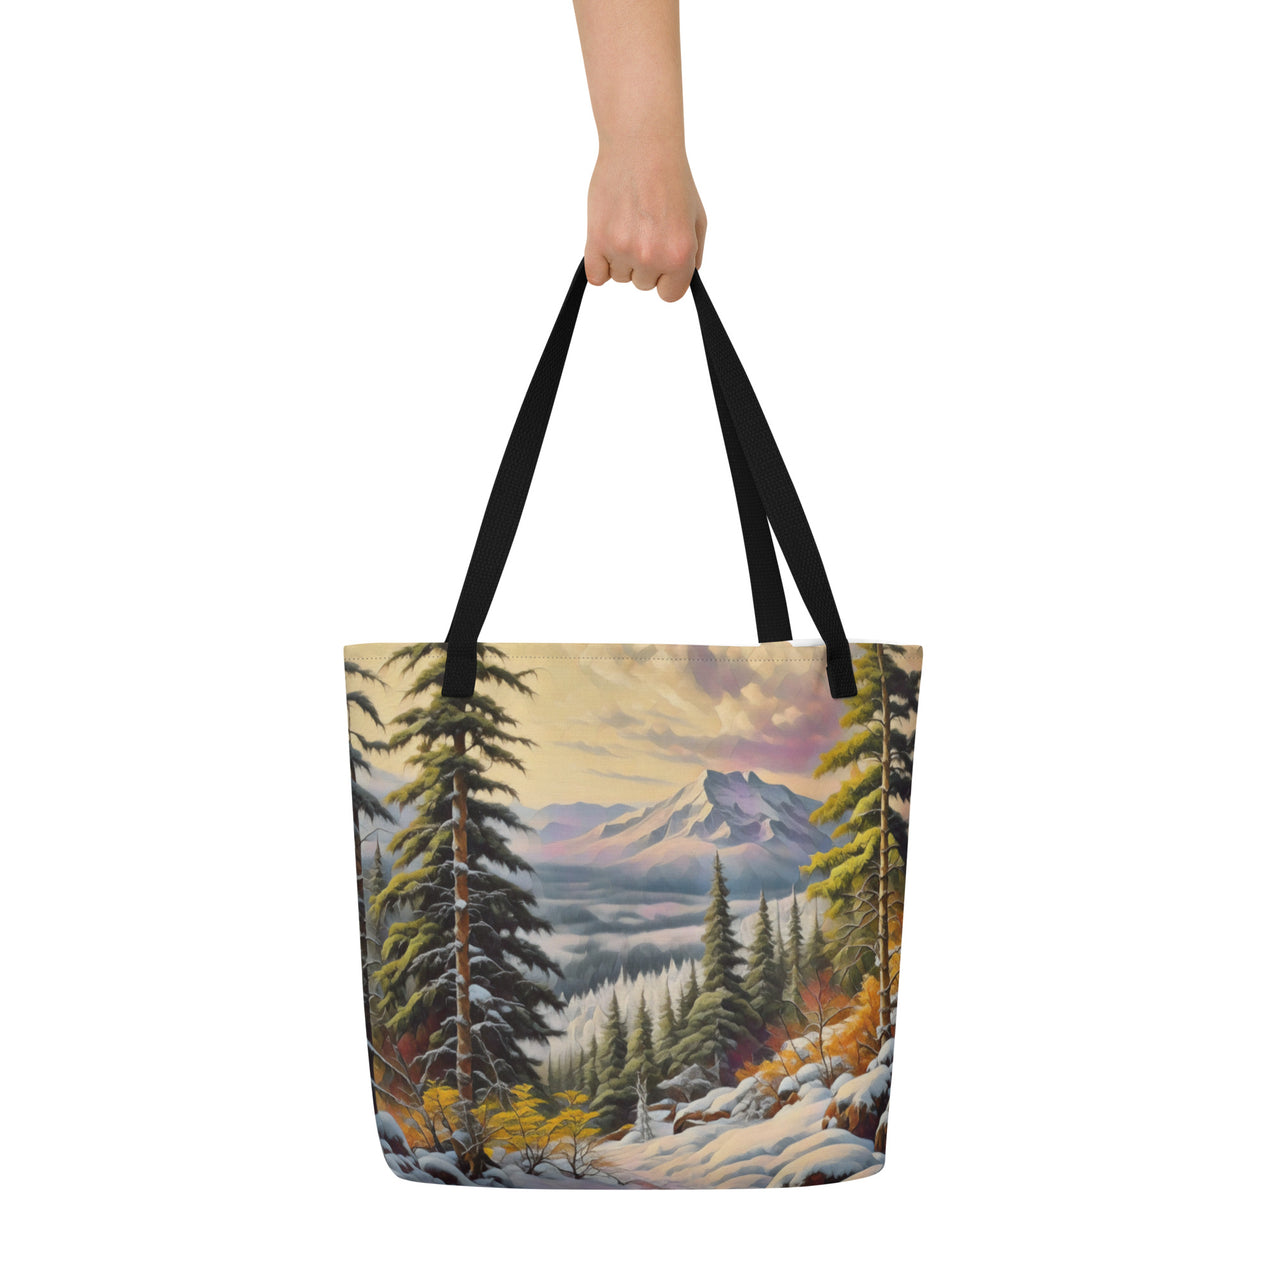 Winter Trail - Digital Art - Large 16x20 Tote Bag W/Pocket